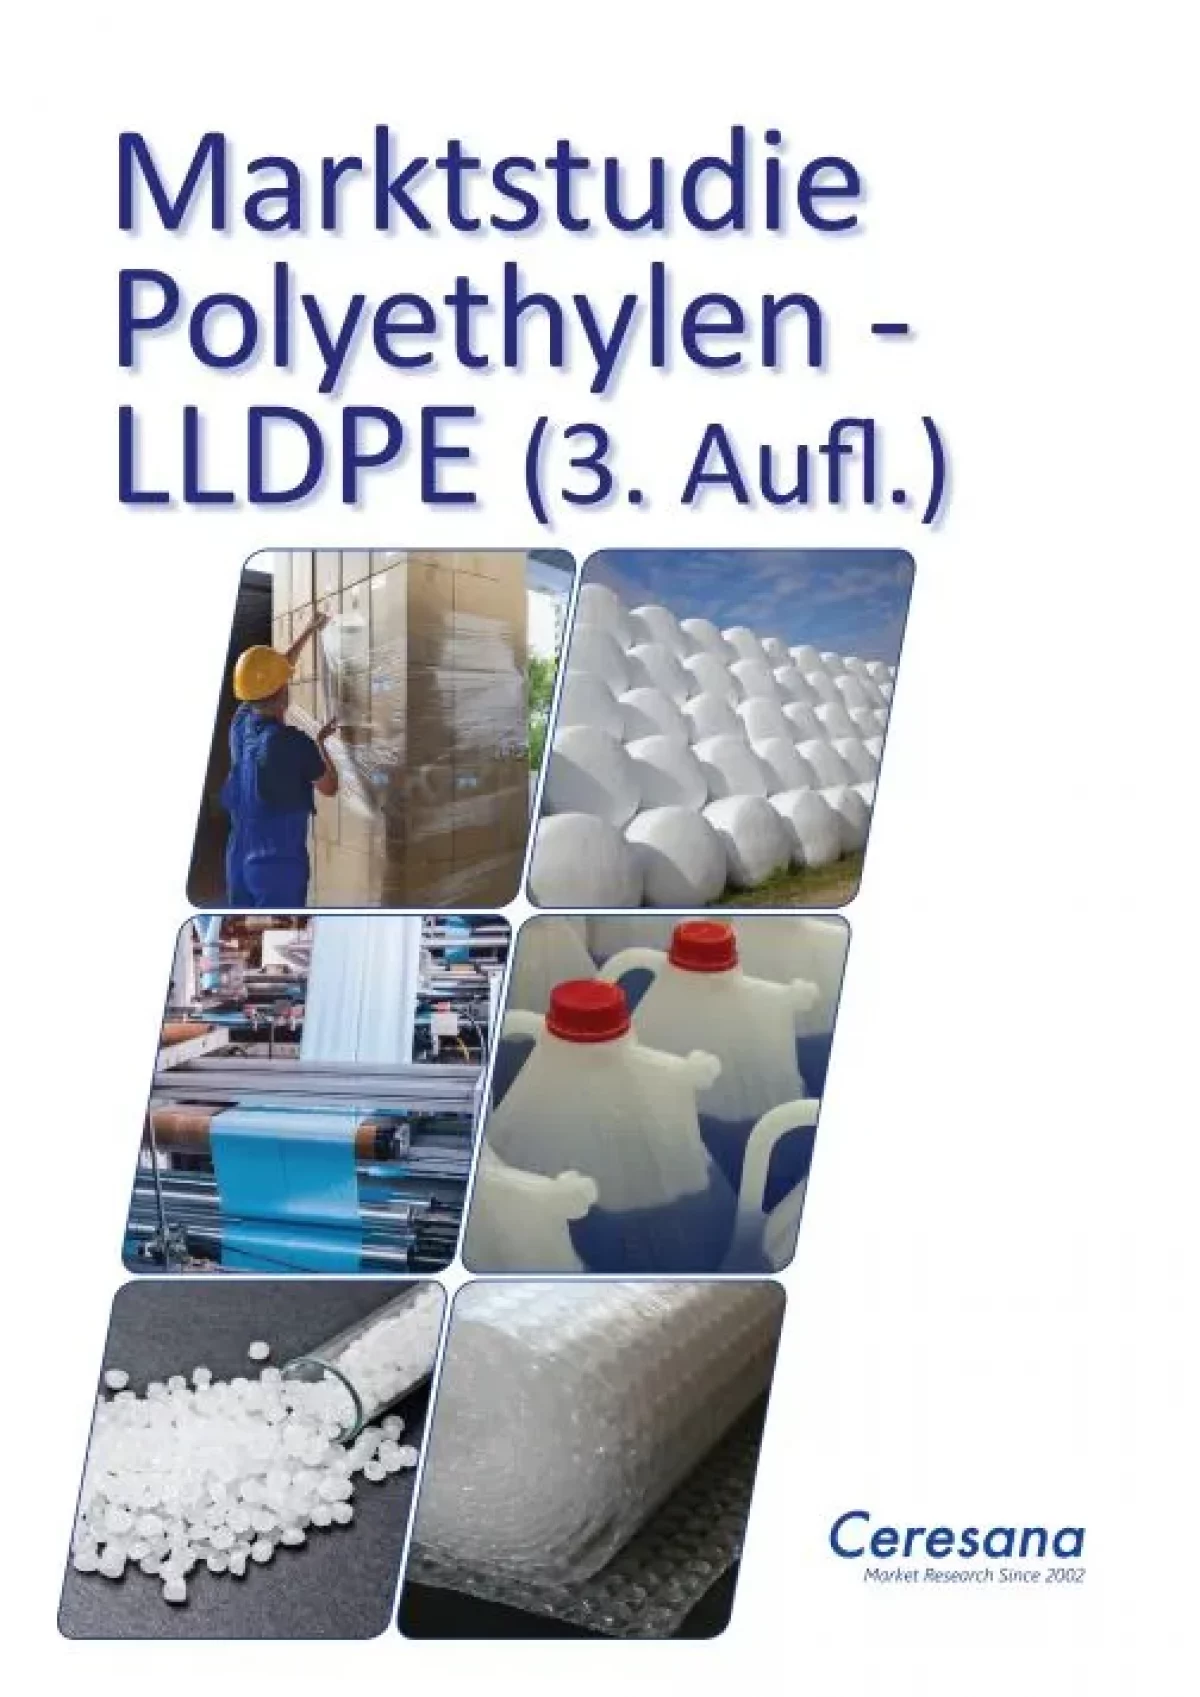 Marktstudie Polyethylen LLDPE: Markt, Analyse